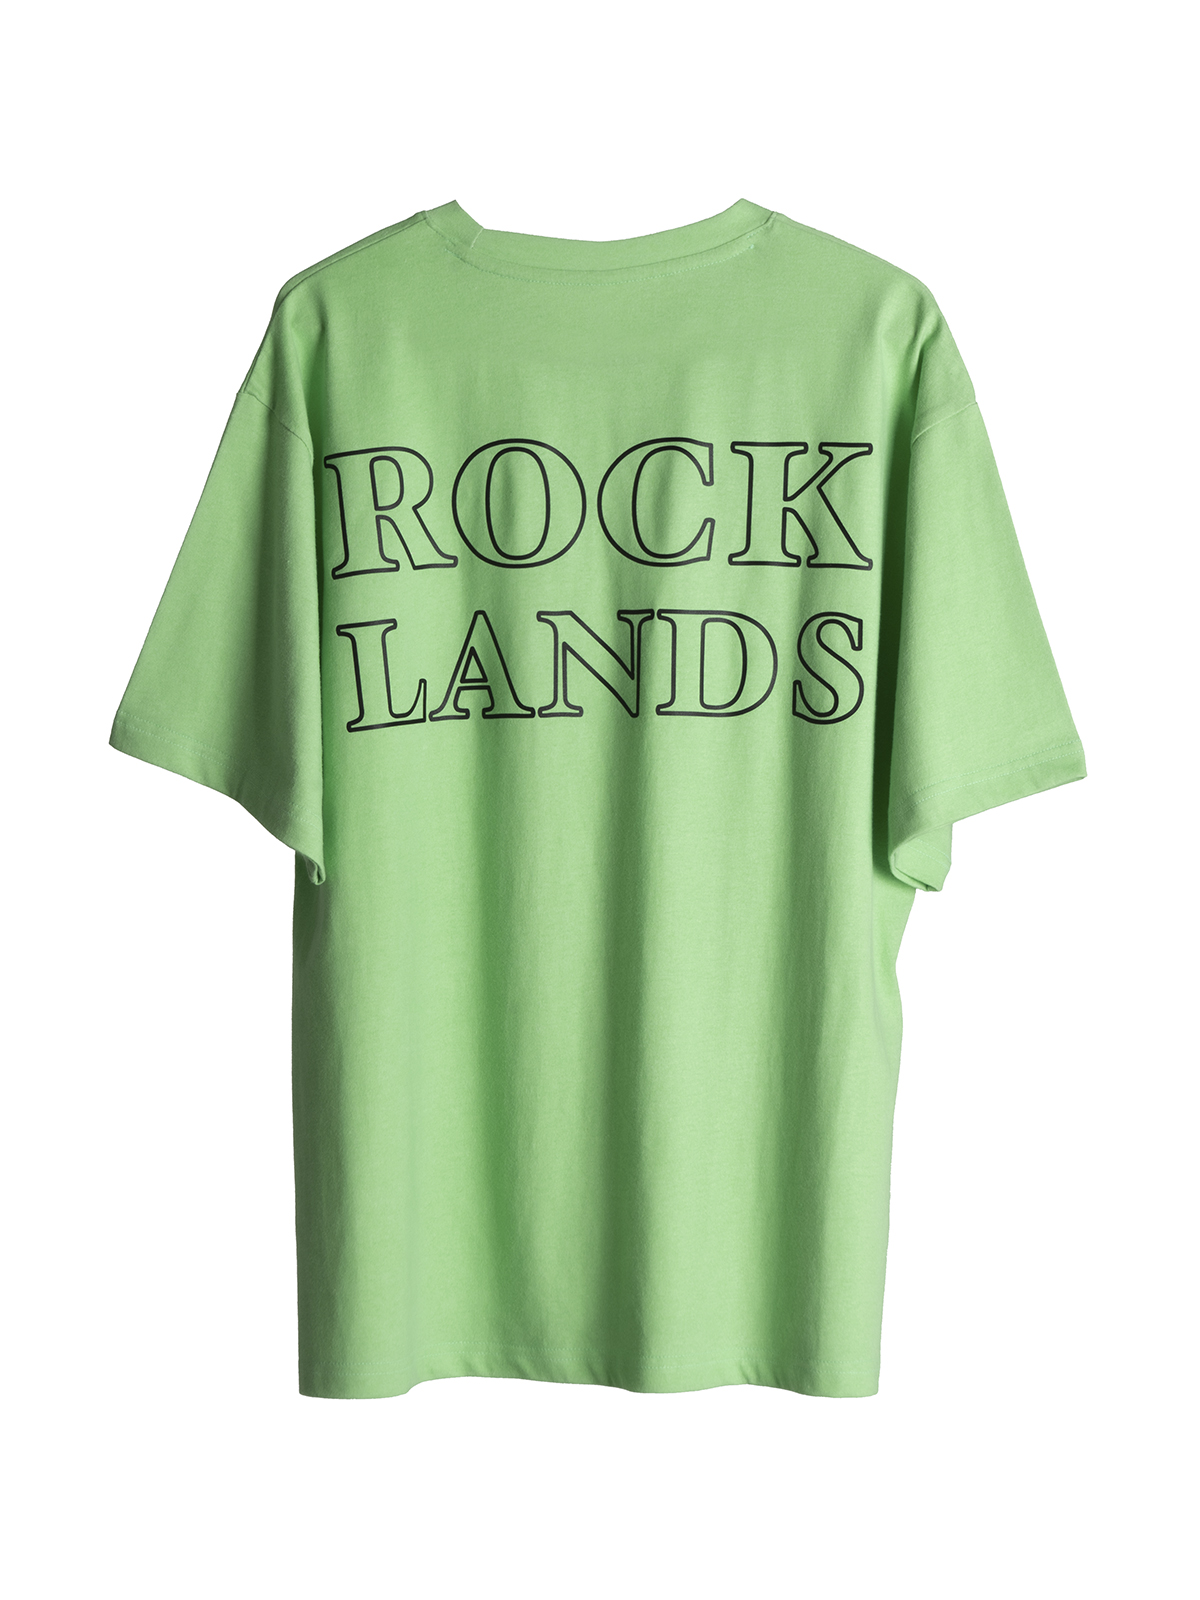 Rocksland T-Shirt - Pigment